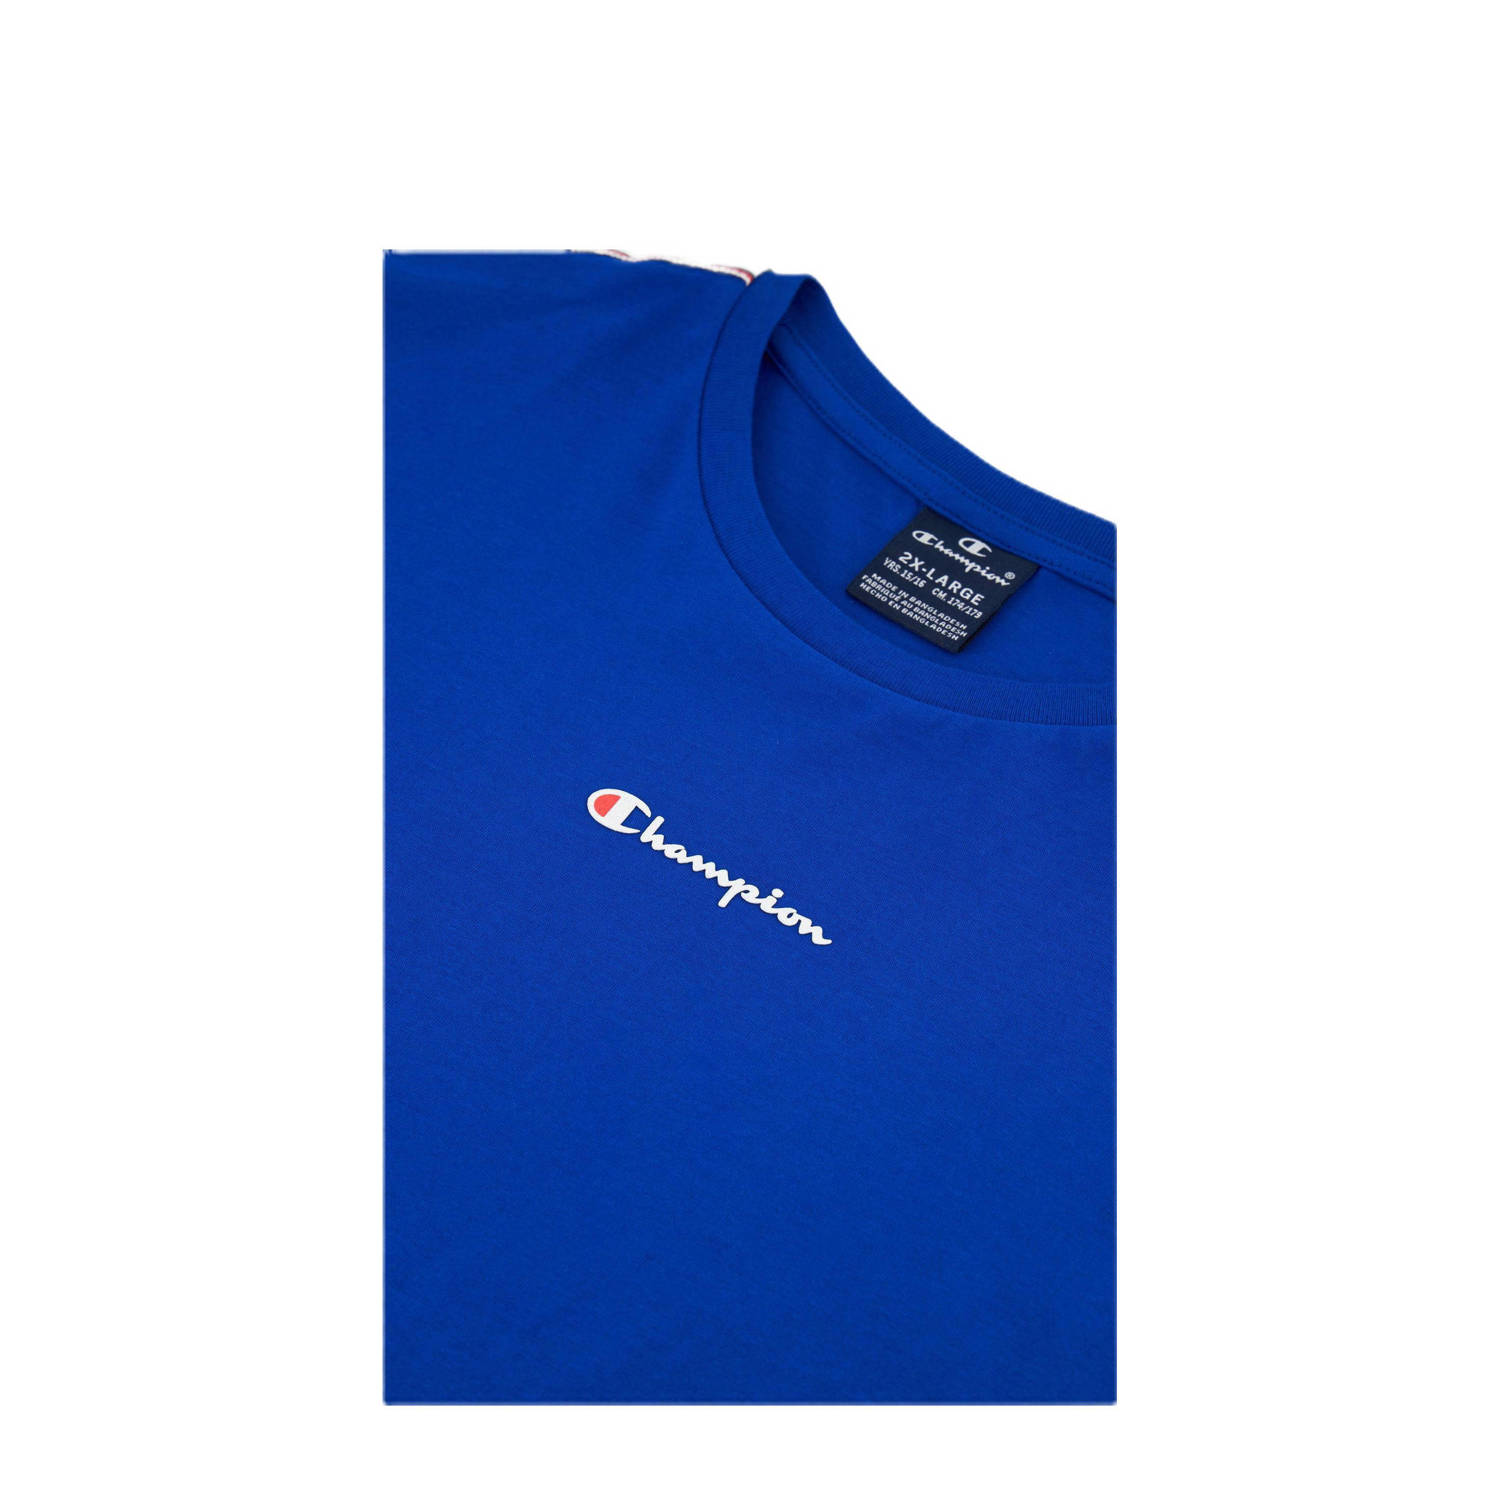 Champion T-shirt met logo blauw